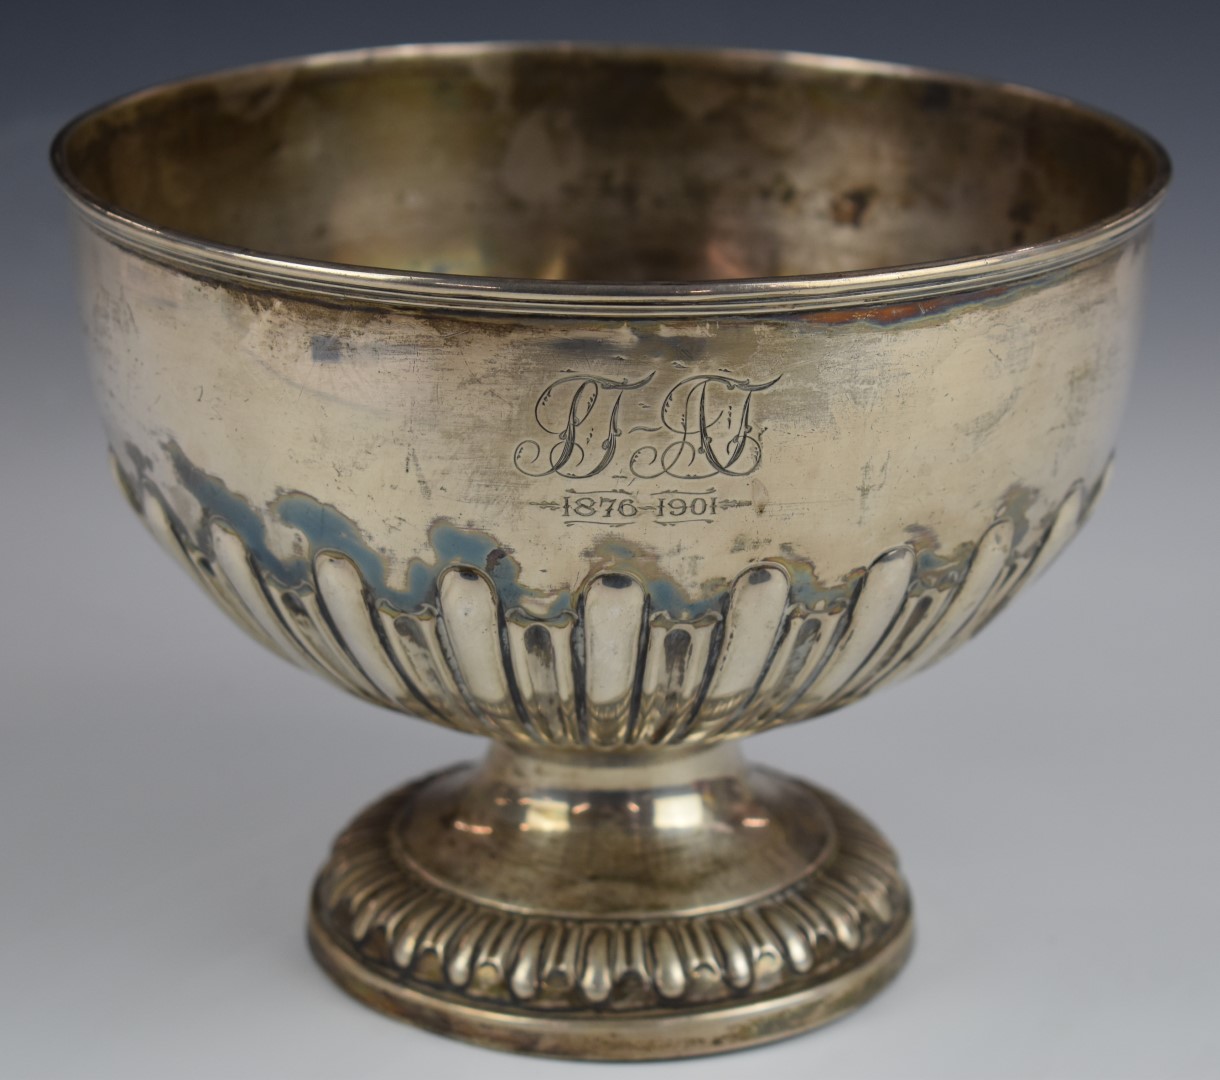 Victorian hallmarked silver rose bowl with reeded decoration, Sheffield 1900, maker Fenton